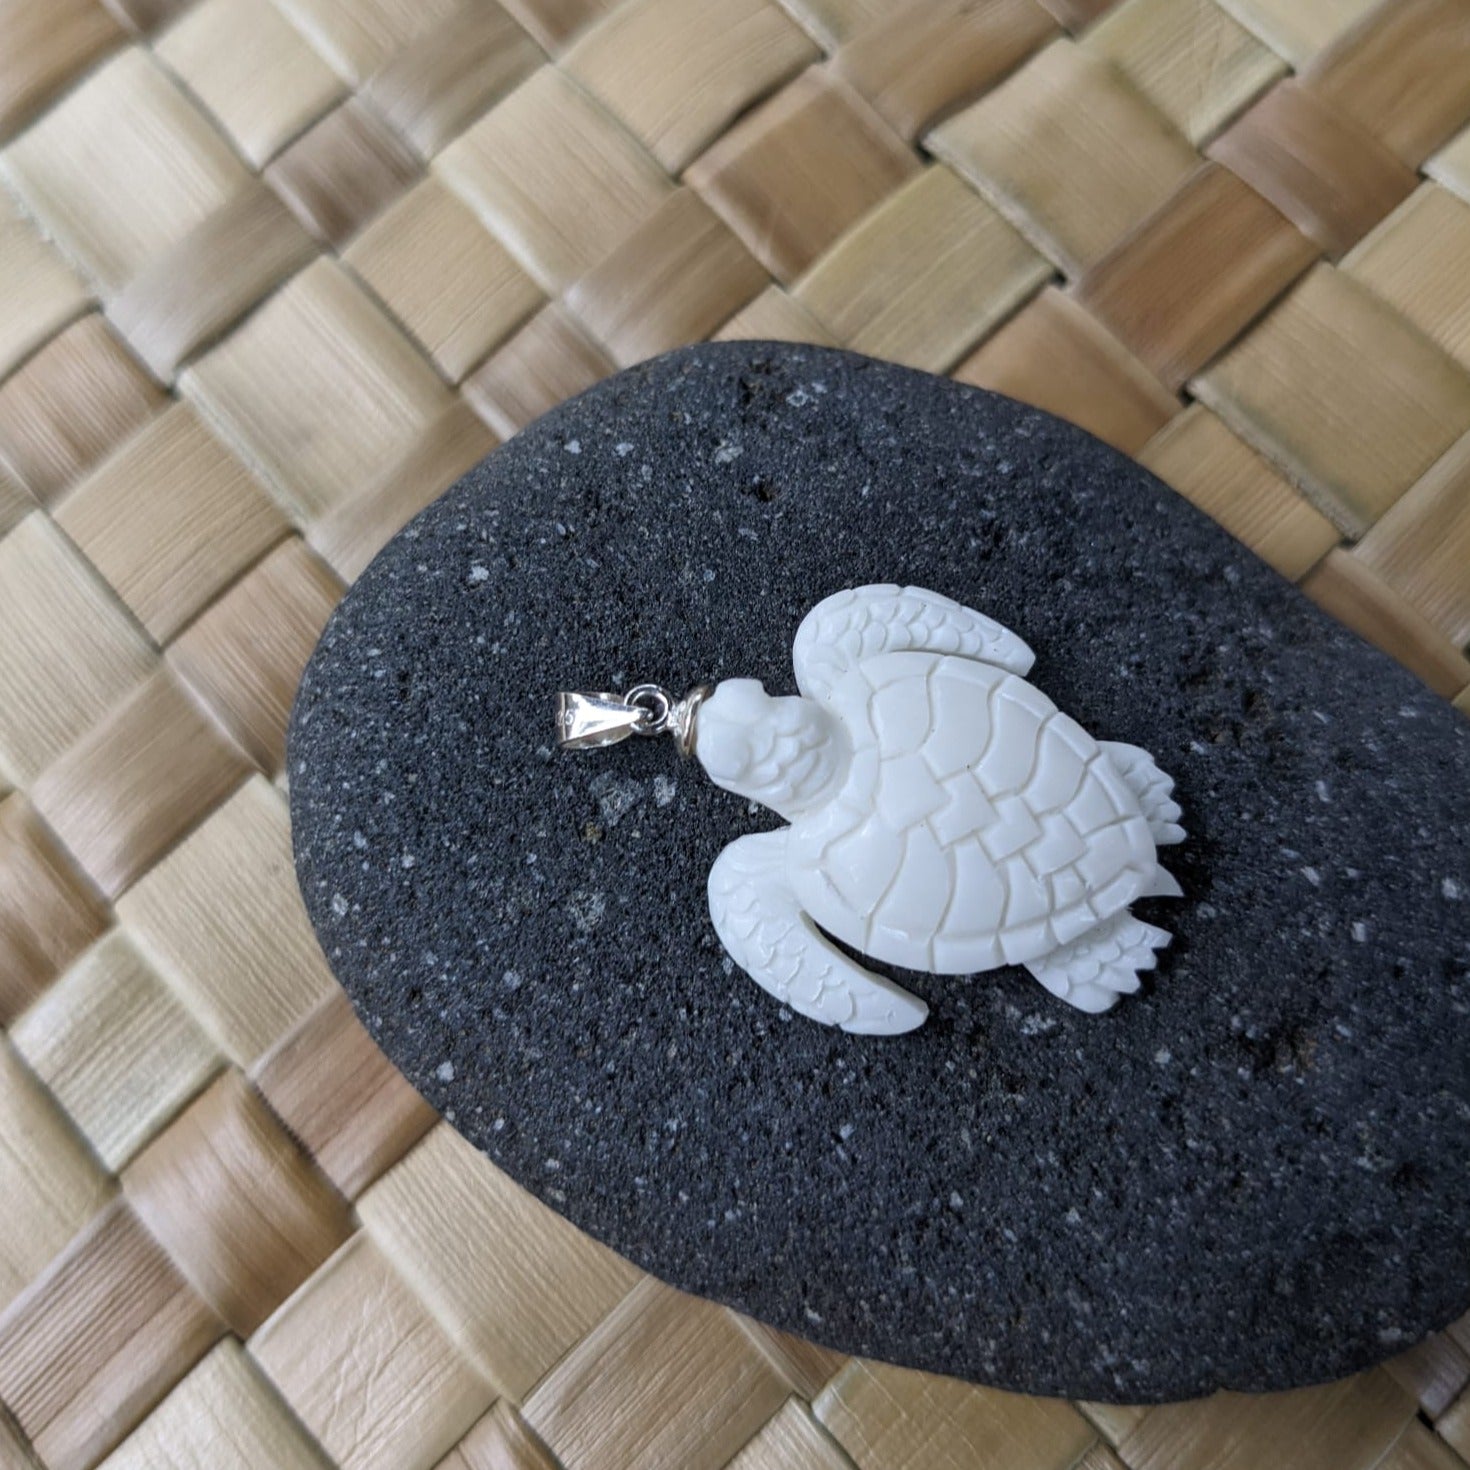 FX030 Aztec bone necklace Sea turtle pendant men Choker American Maya Inca  Jewelry Nautical style Imitation